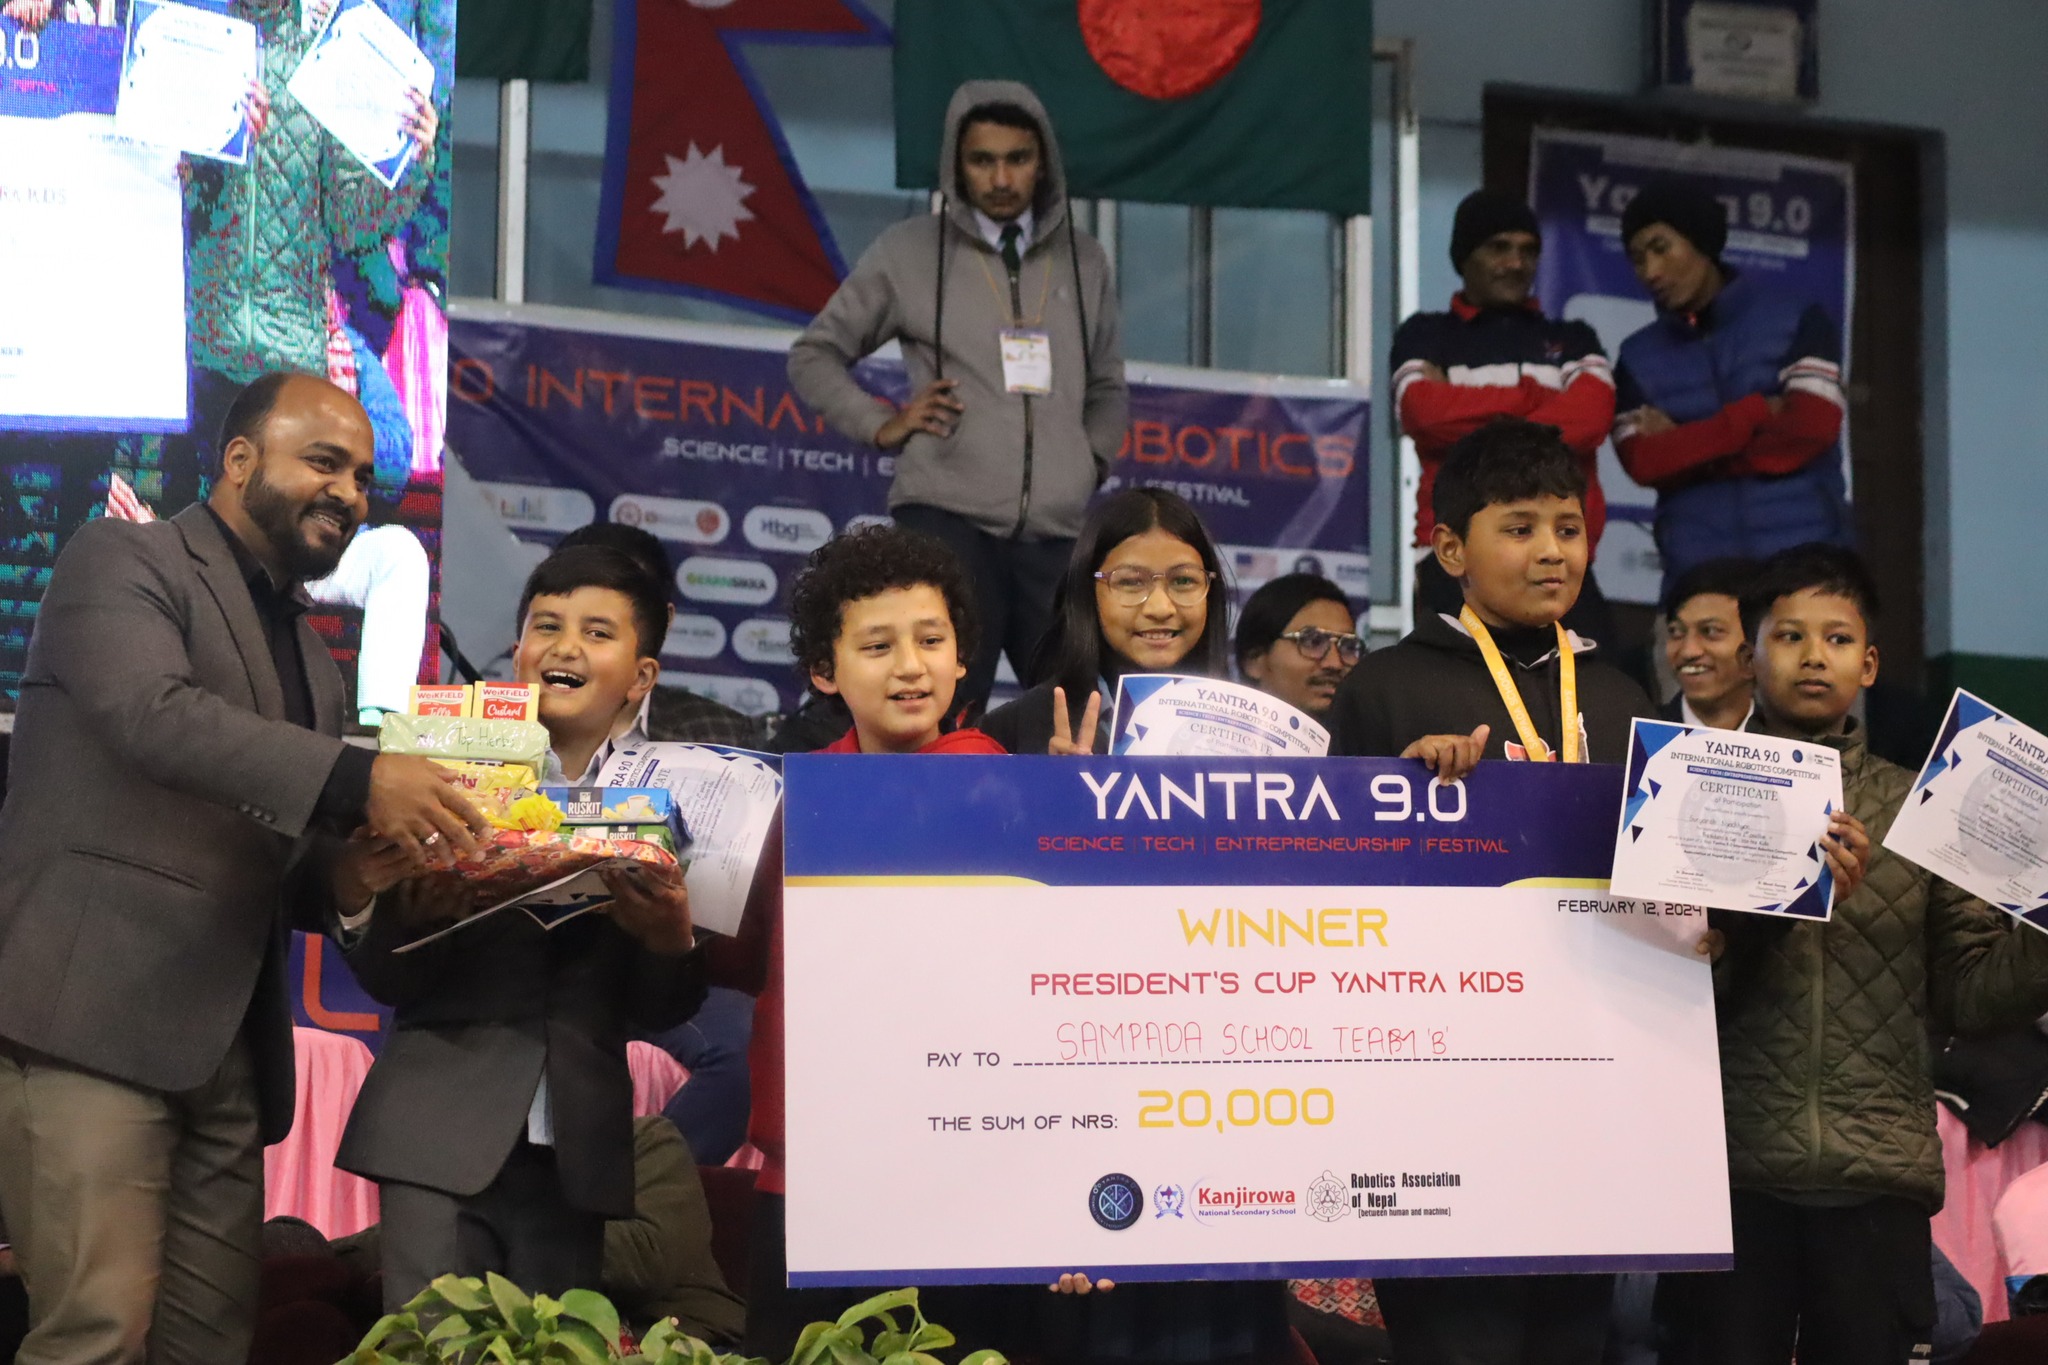 Presidents Cup Yantra Kids Winner - Sapada School Team B